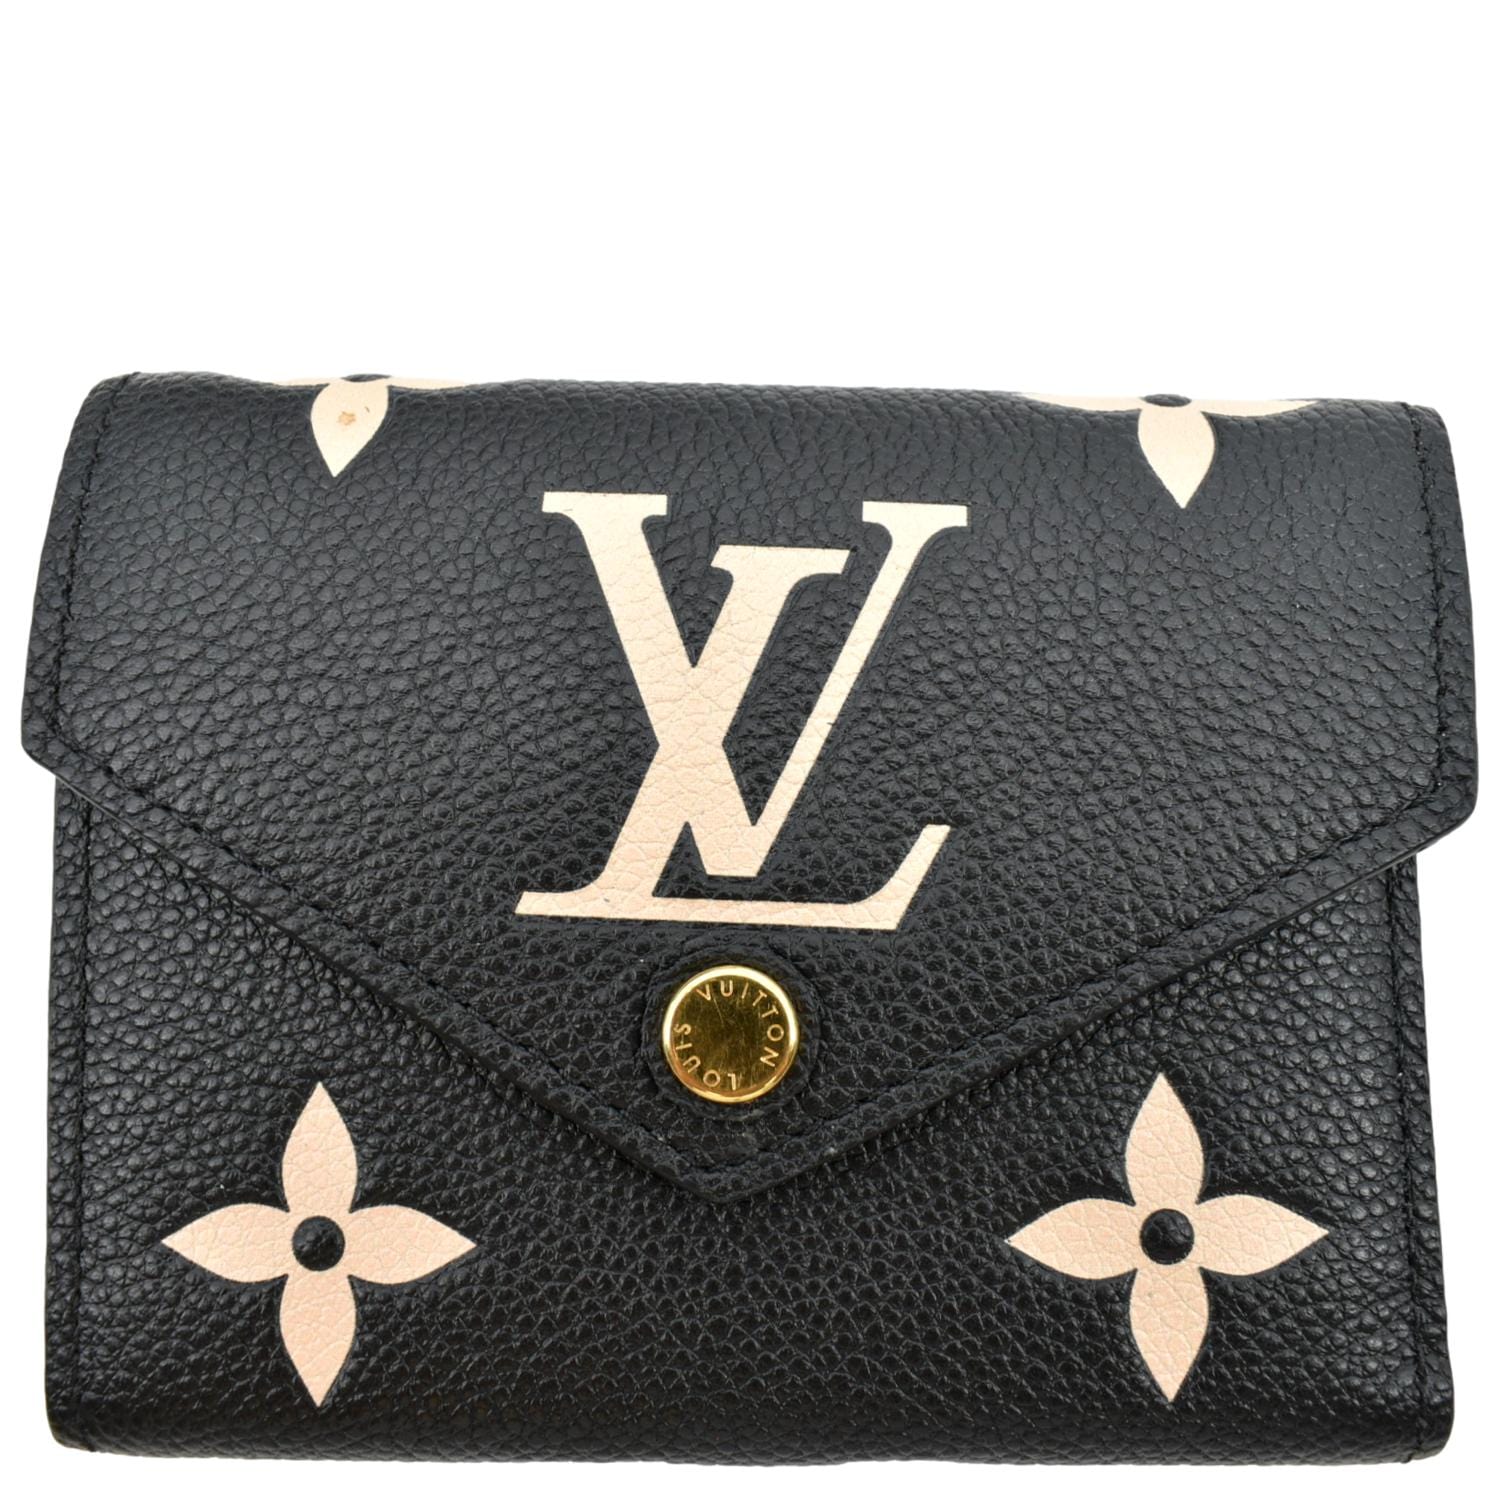 Authentic Louis Vuitton Victorine wallet, like a hot